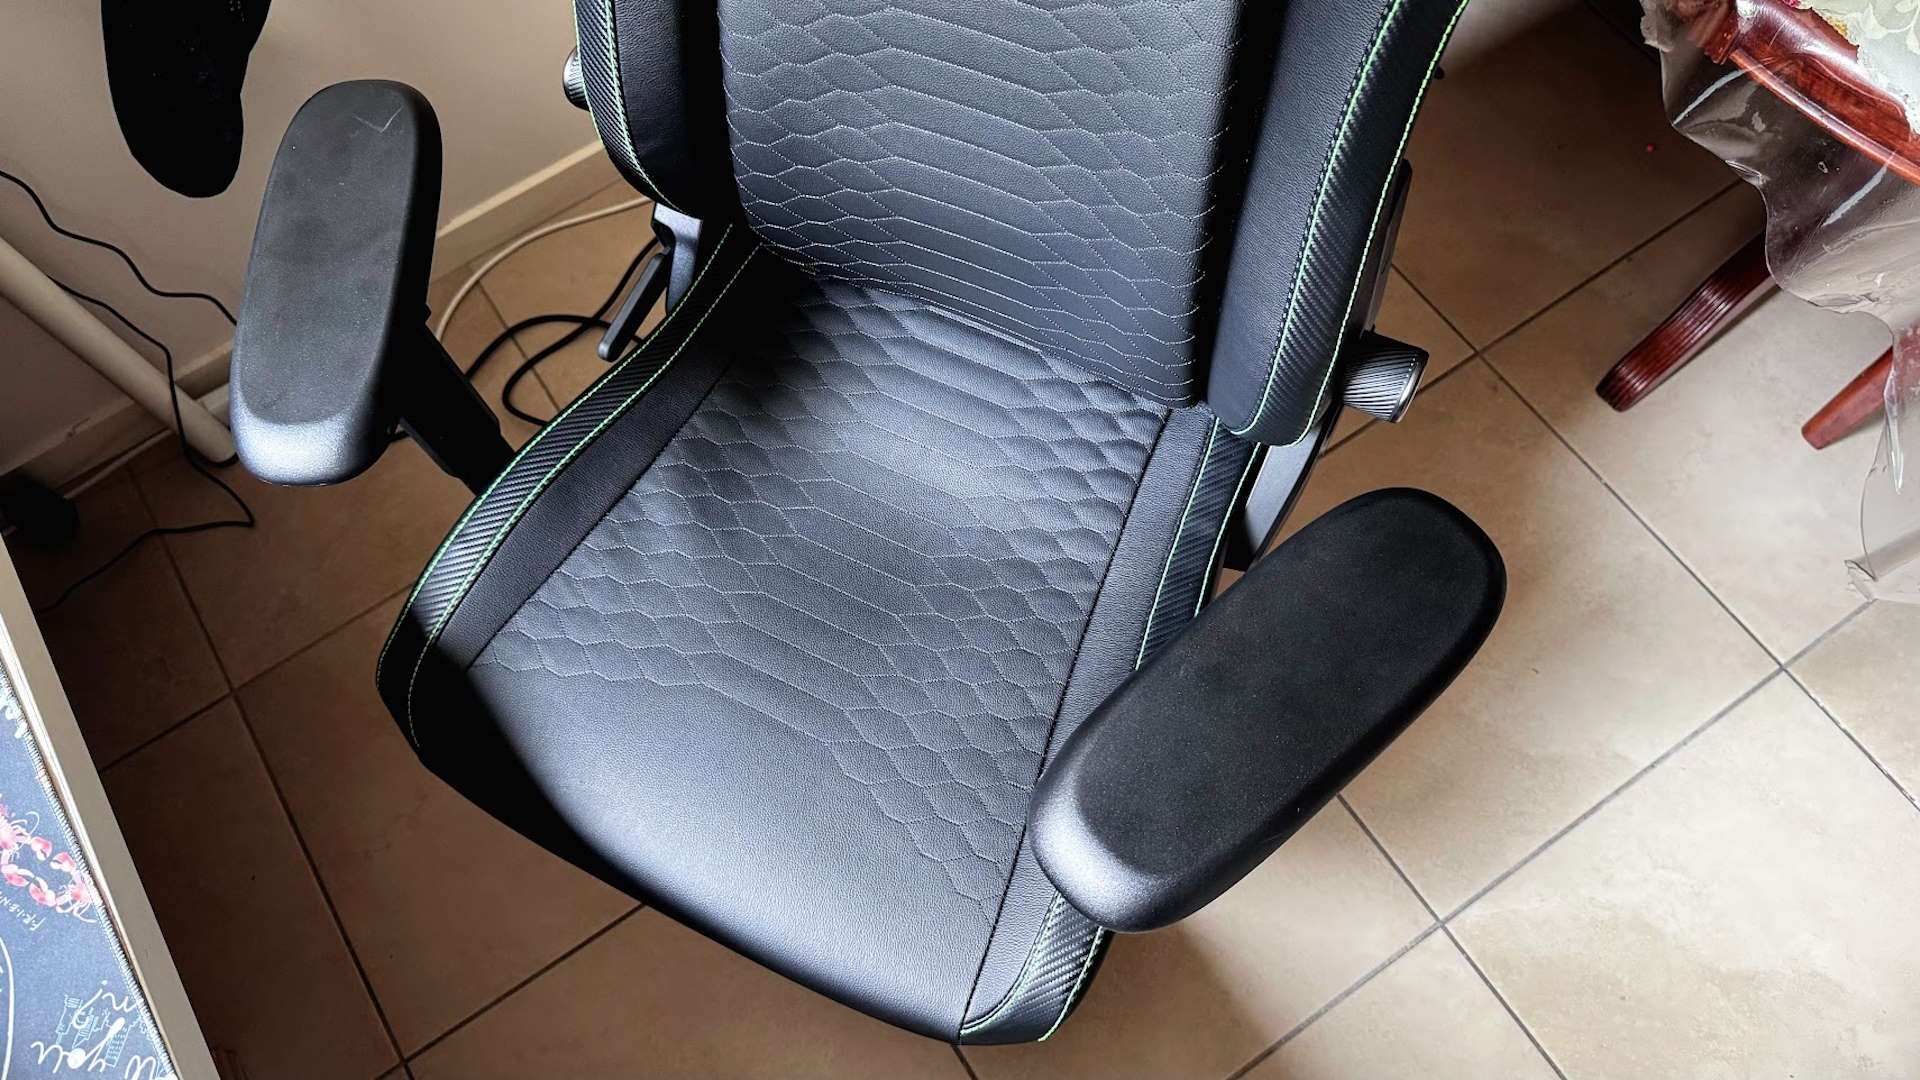 Razer Iskur V2 gaming chair